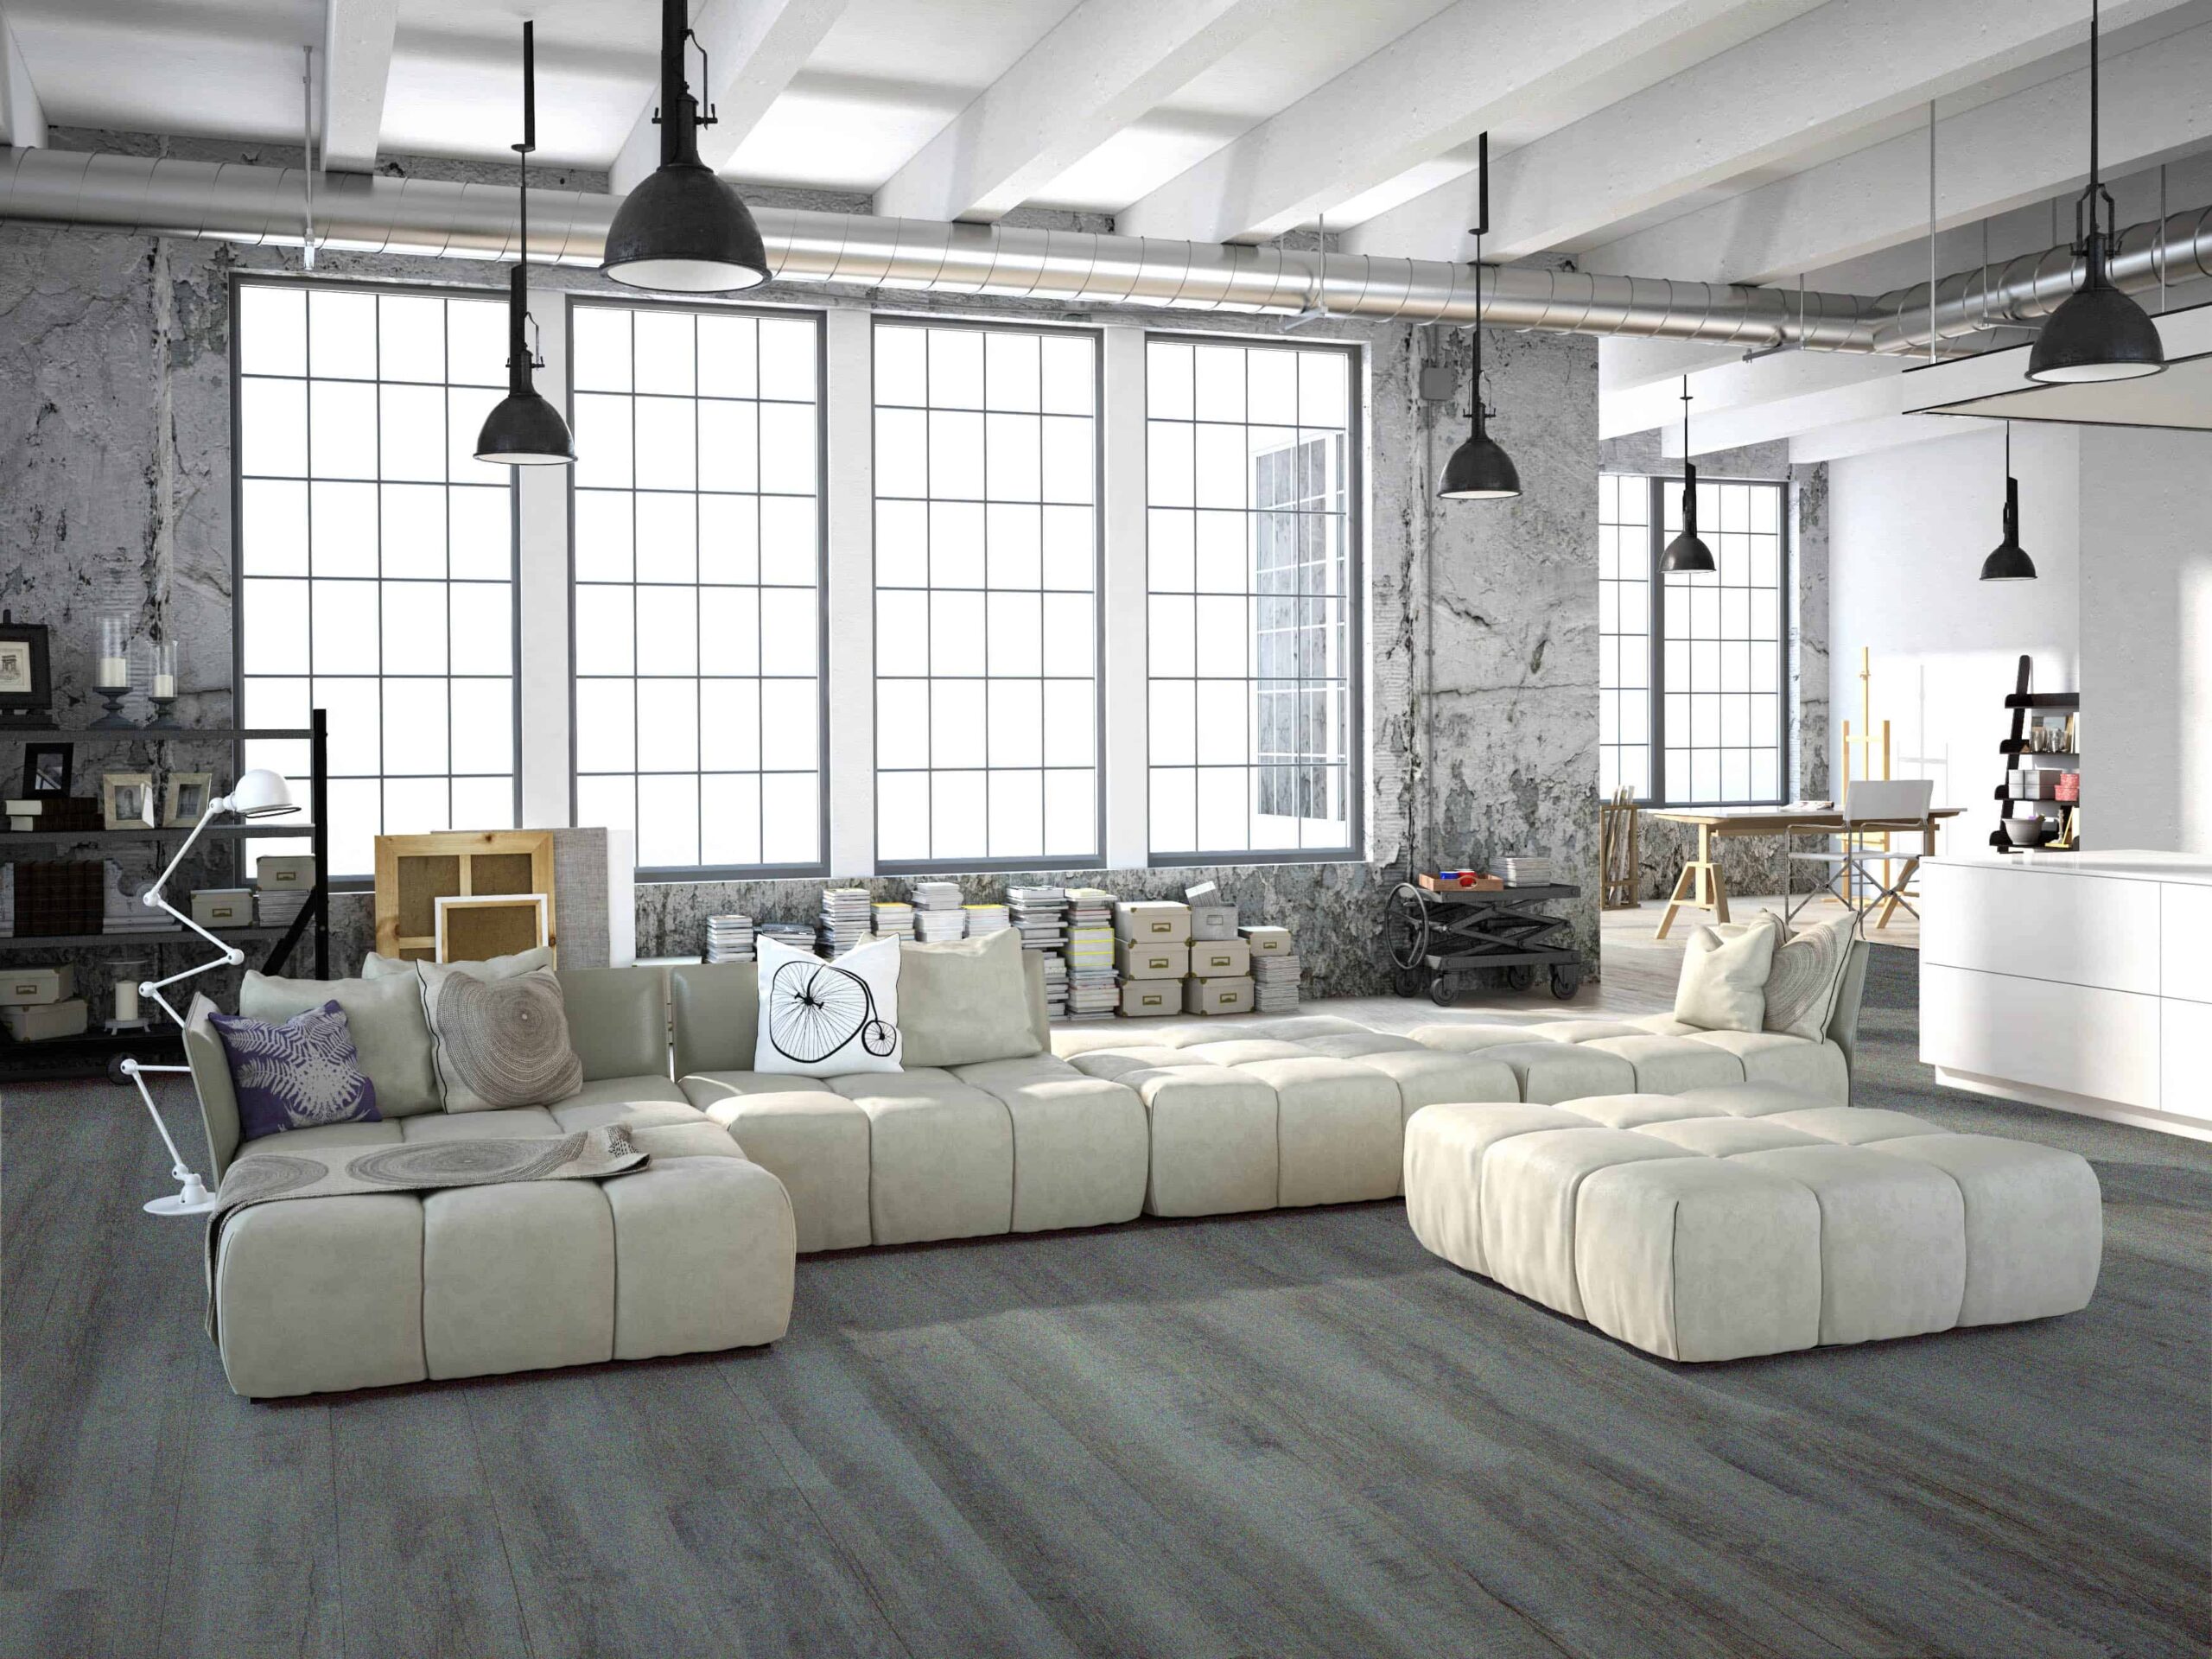 3D rendering of living room in a loft